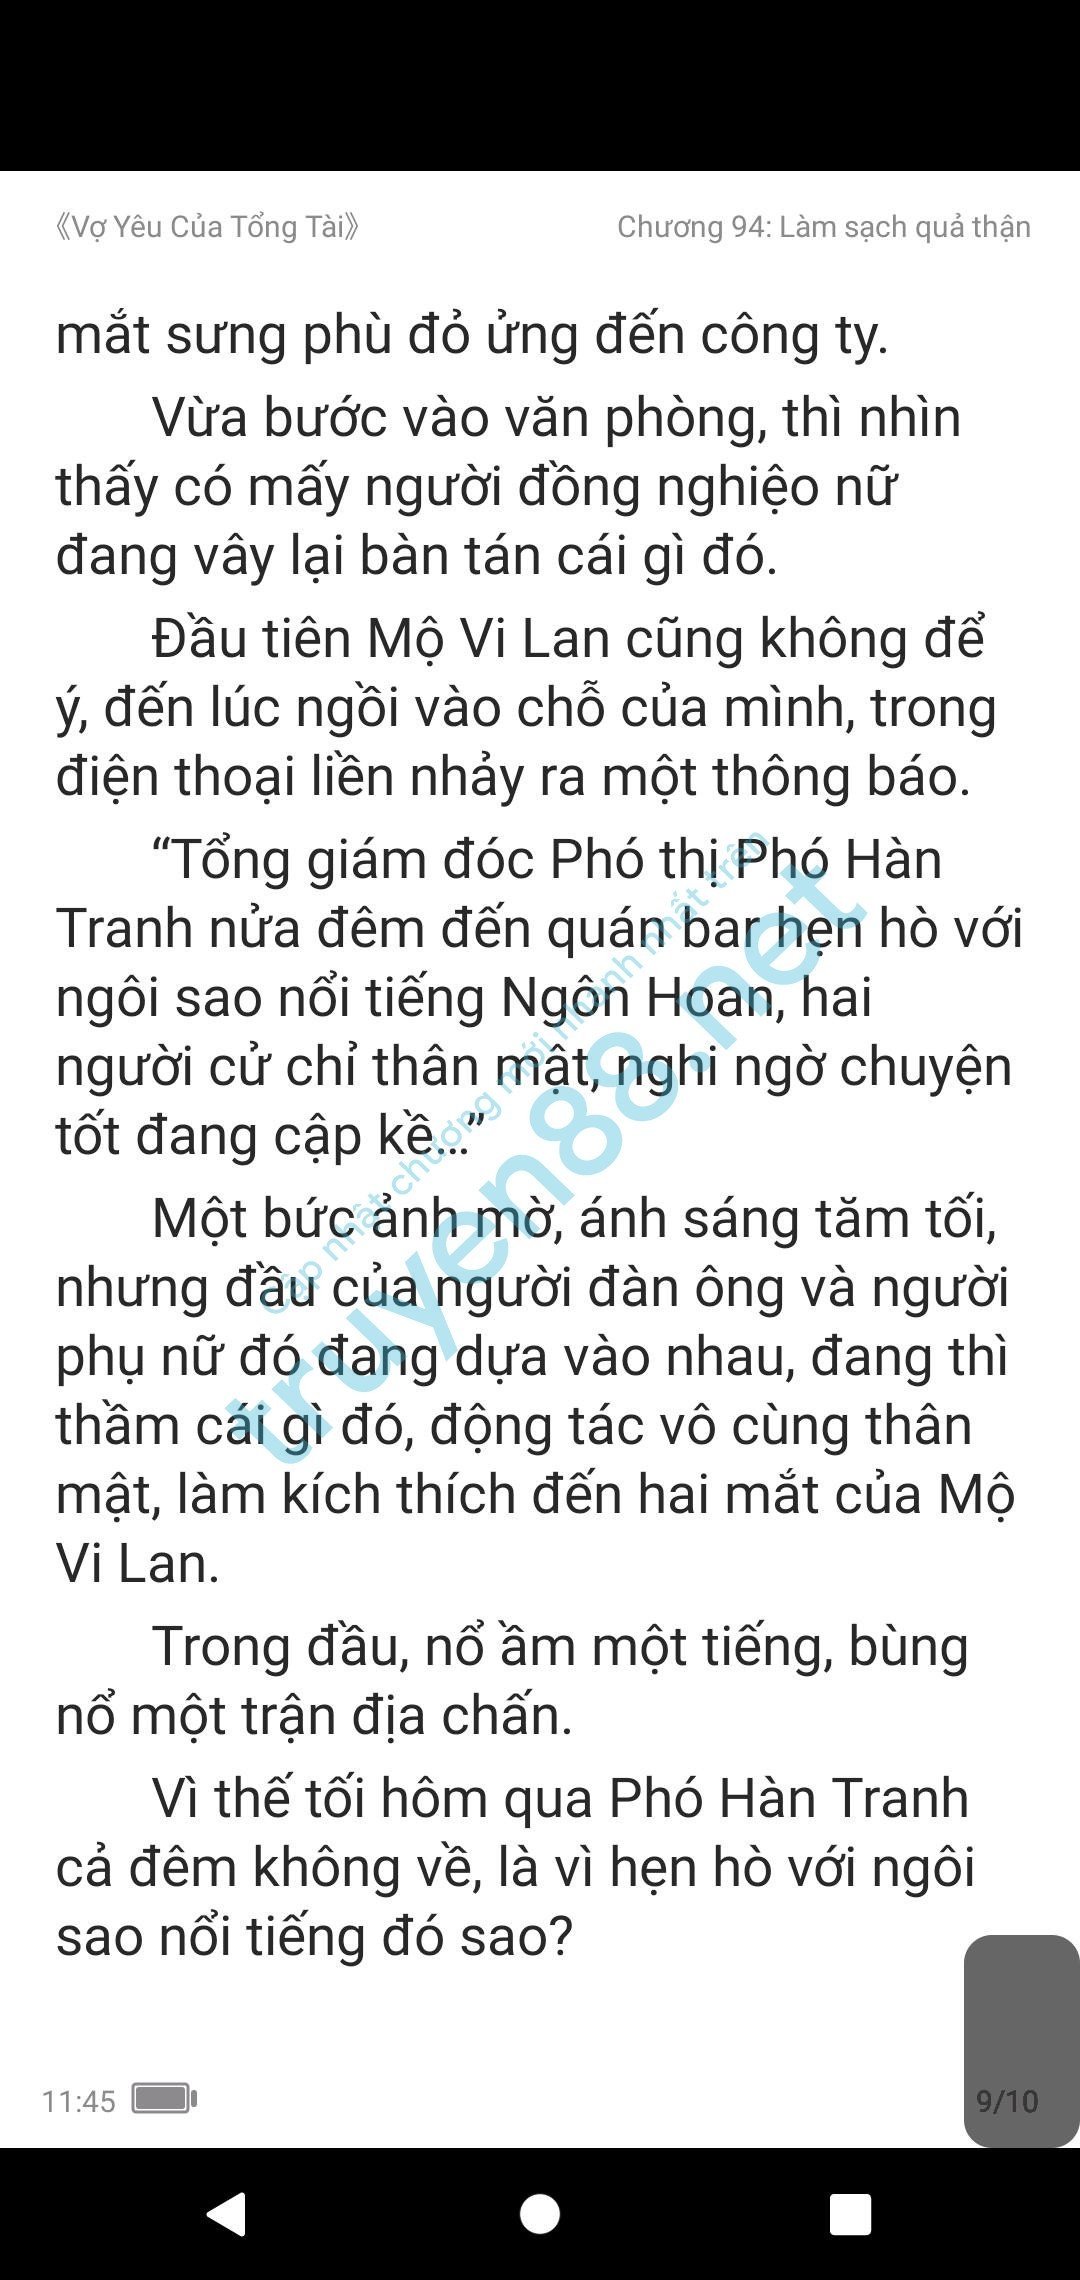 vo-yeu-cua-tong-tai-mo-vi-lan--pho-han-tranh-94-1